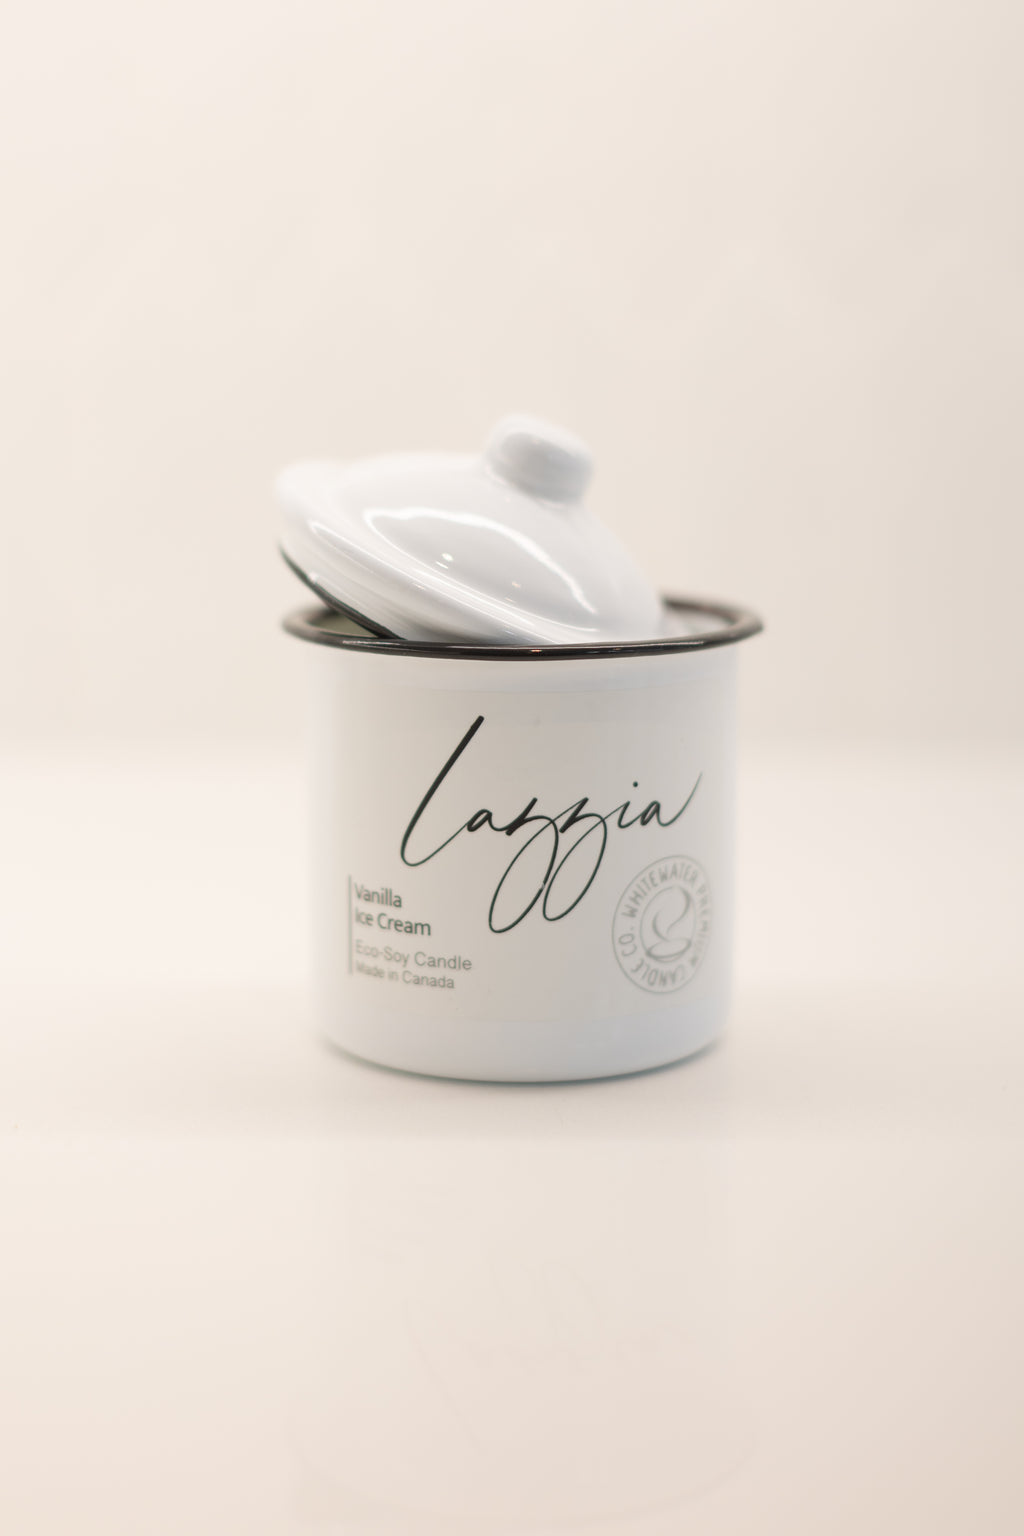 Vanilla Ice Cream Candle 9 oz